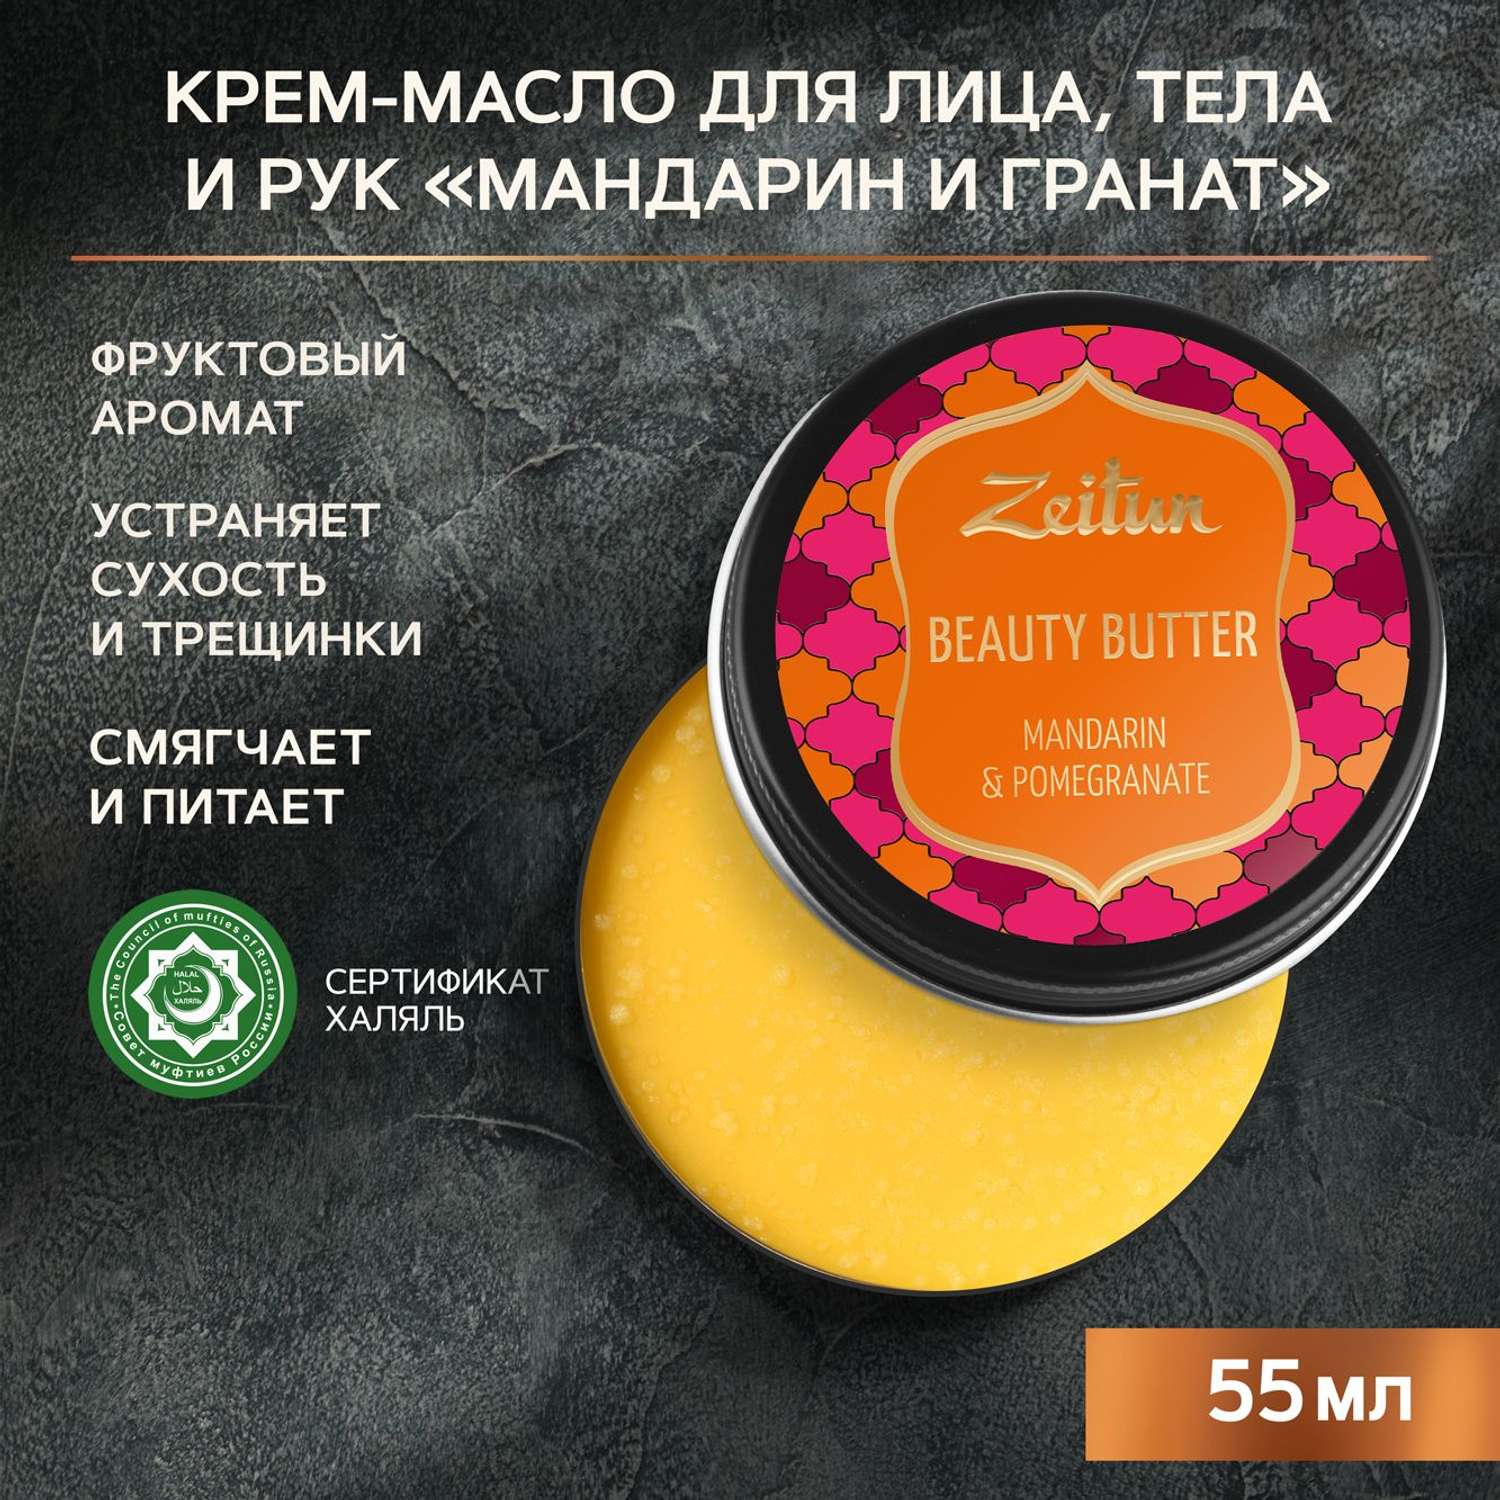 Крем-масло Zeitun Мандарин и гранат баттер увлажняющий для рук тела и лица 55 мл - фото 1